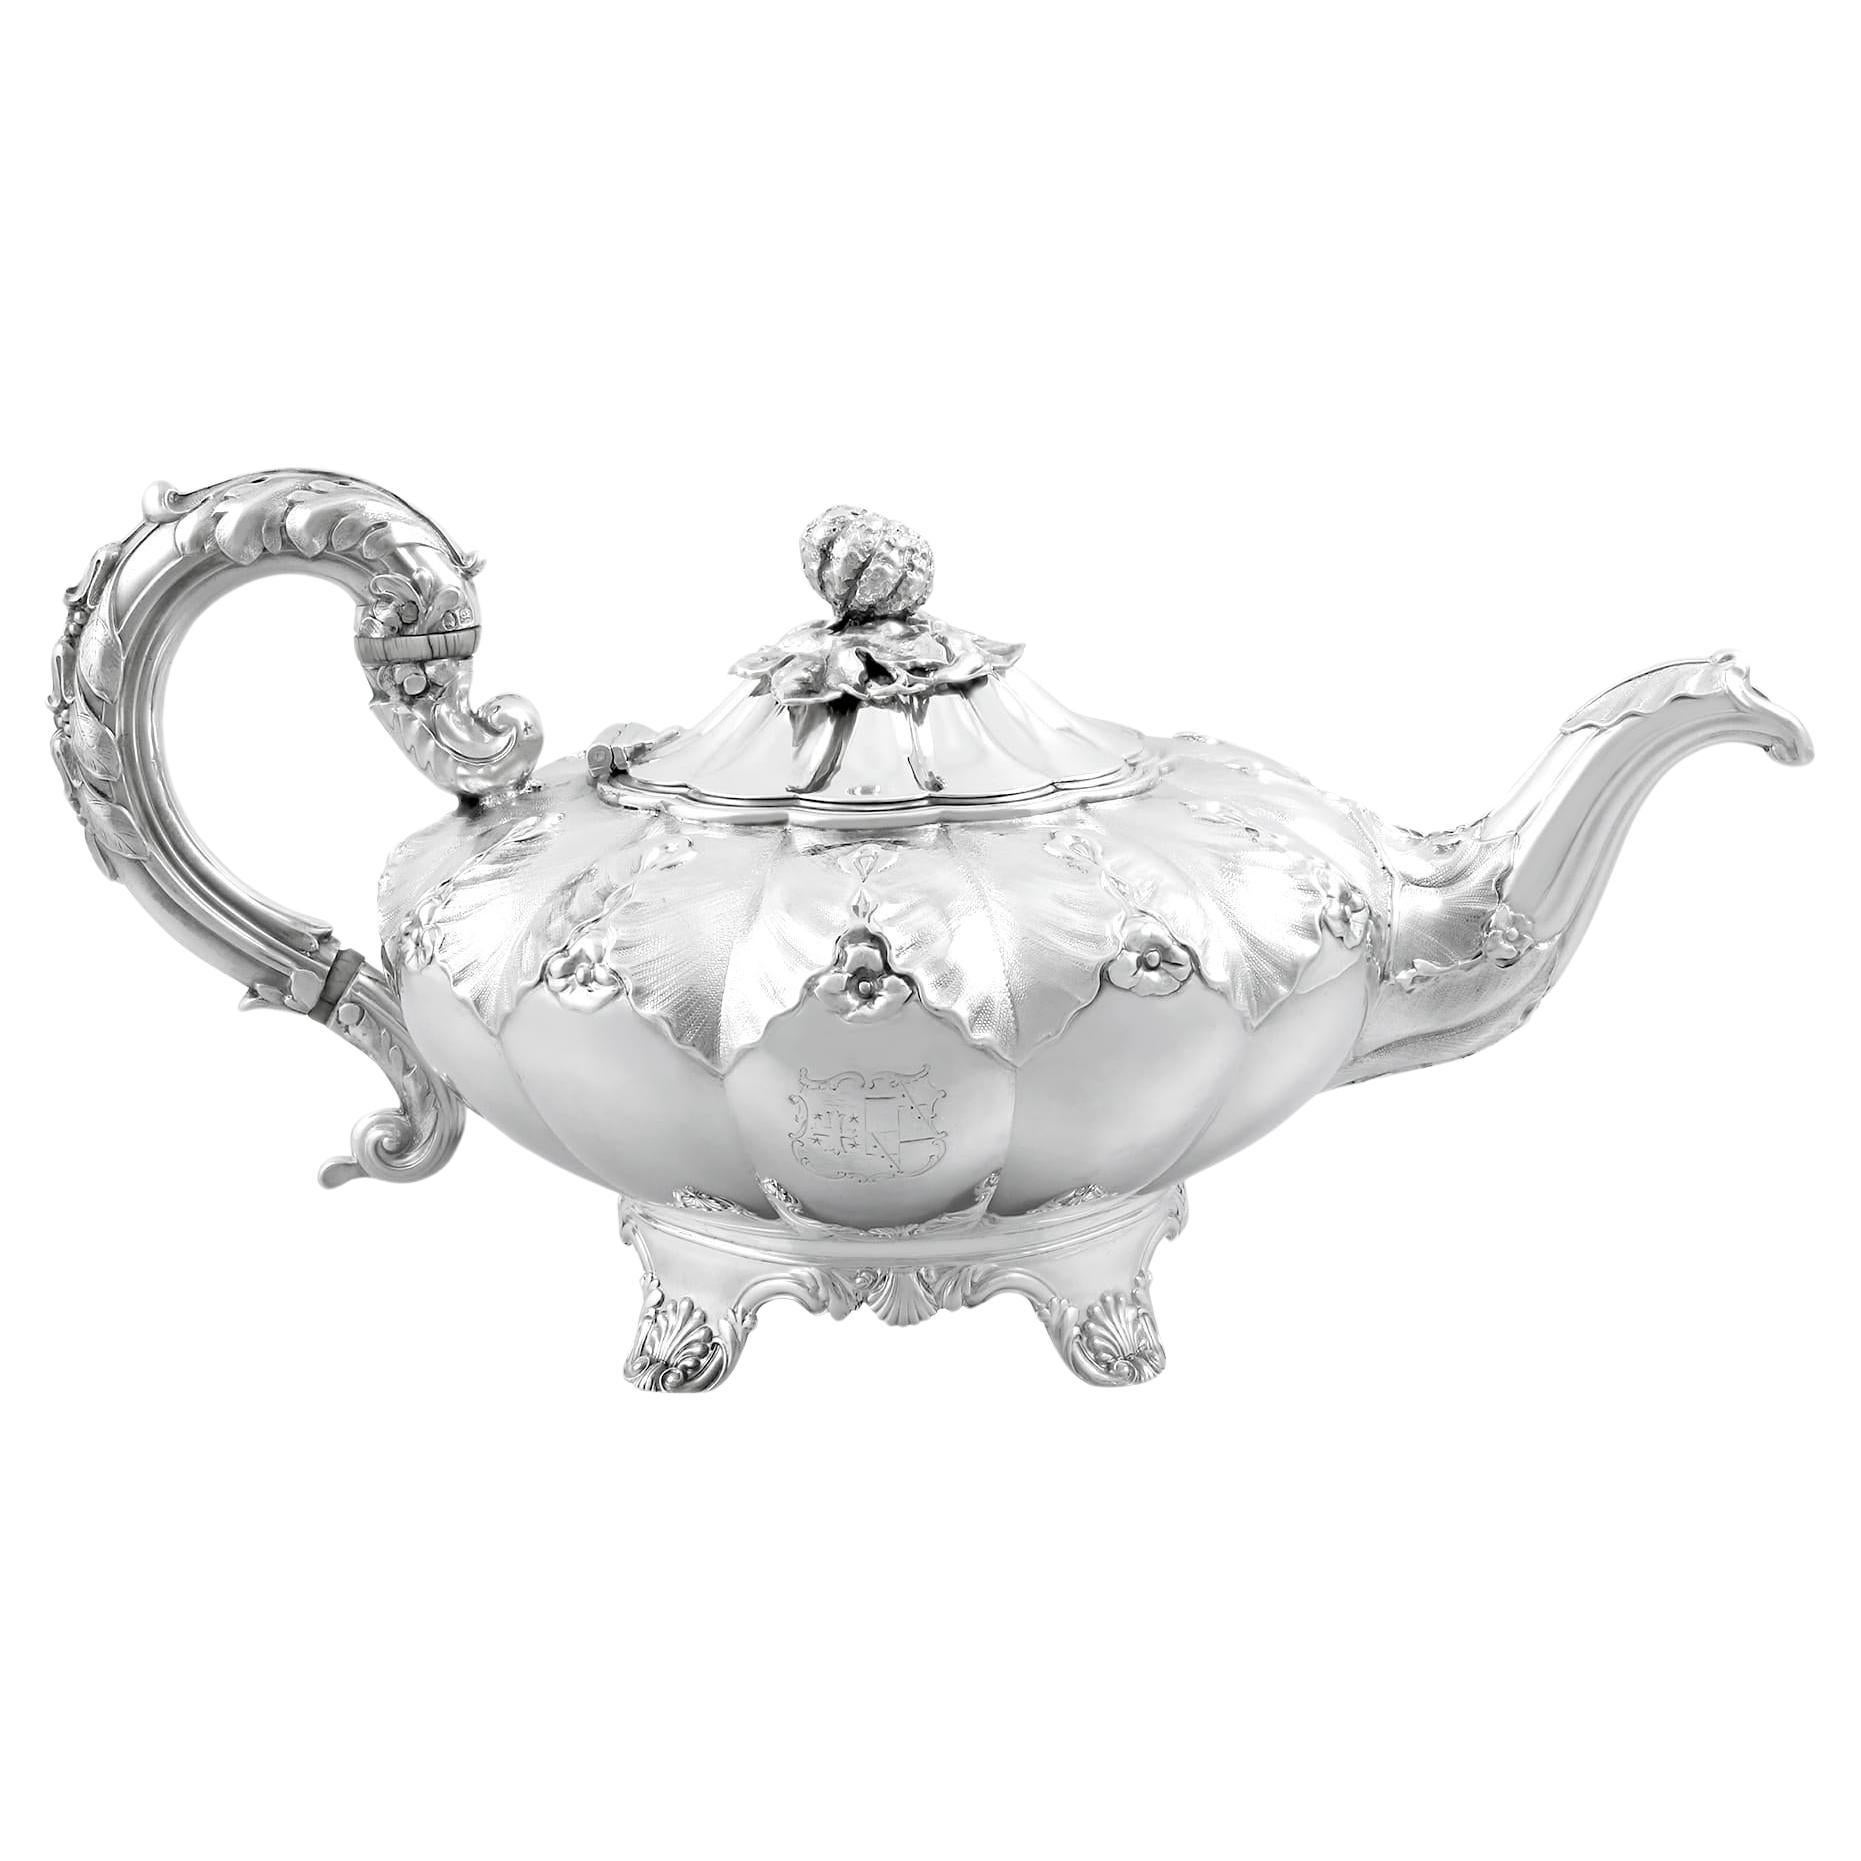 Do silver teapots keep tea hot?